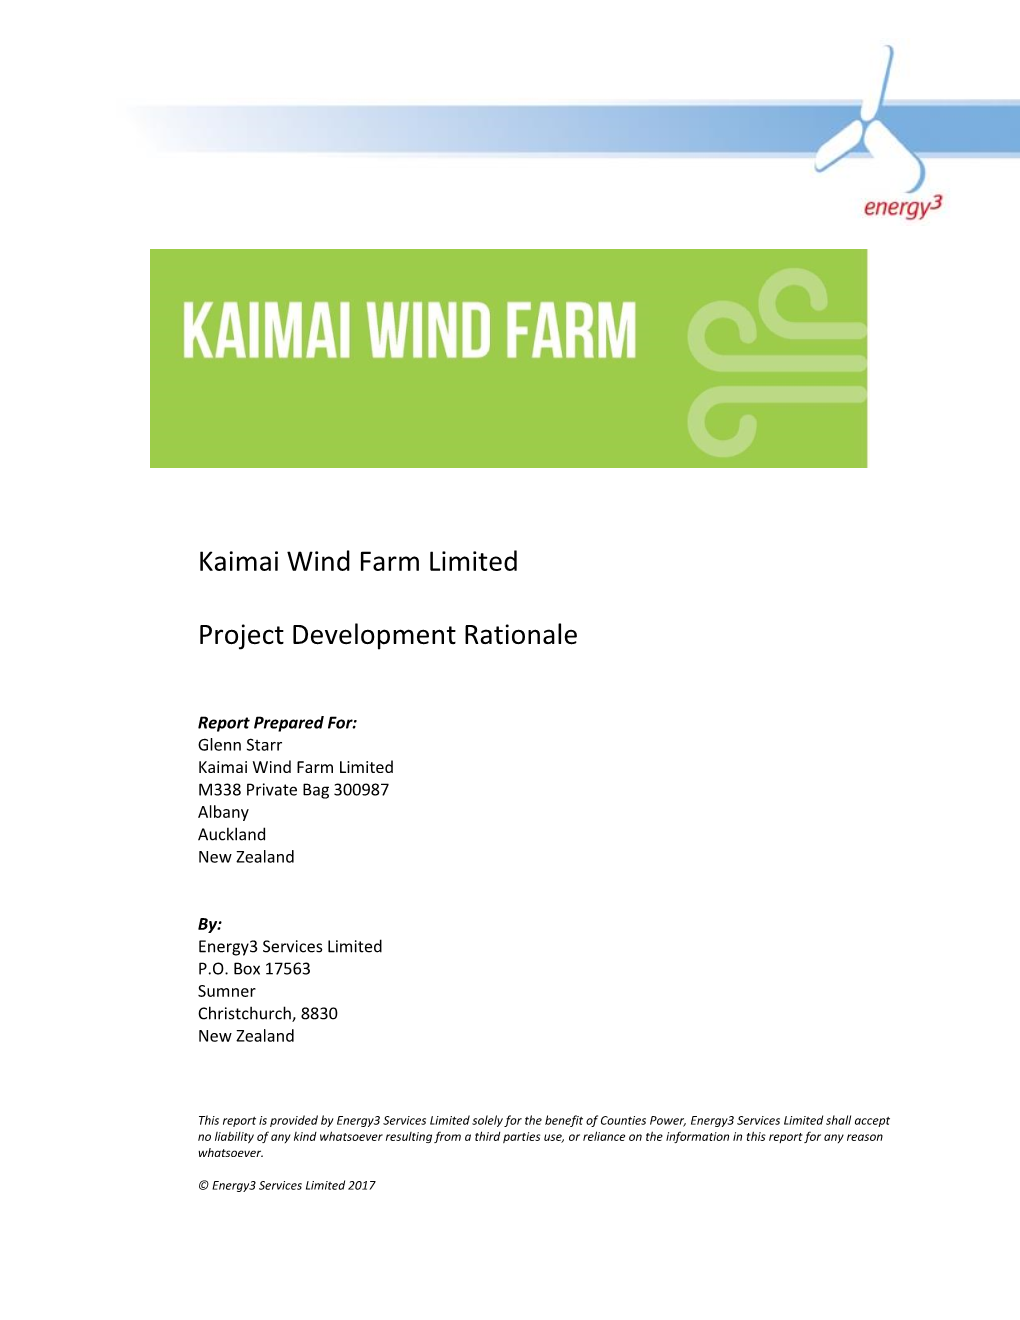 Kaimai Wind Farm Limited Project Development Rationale